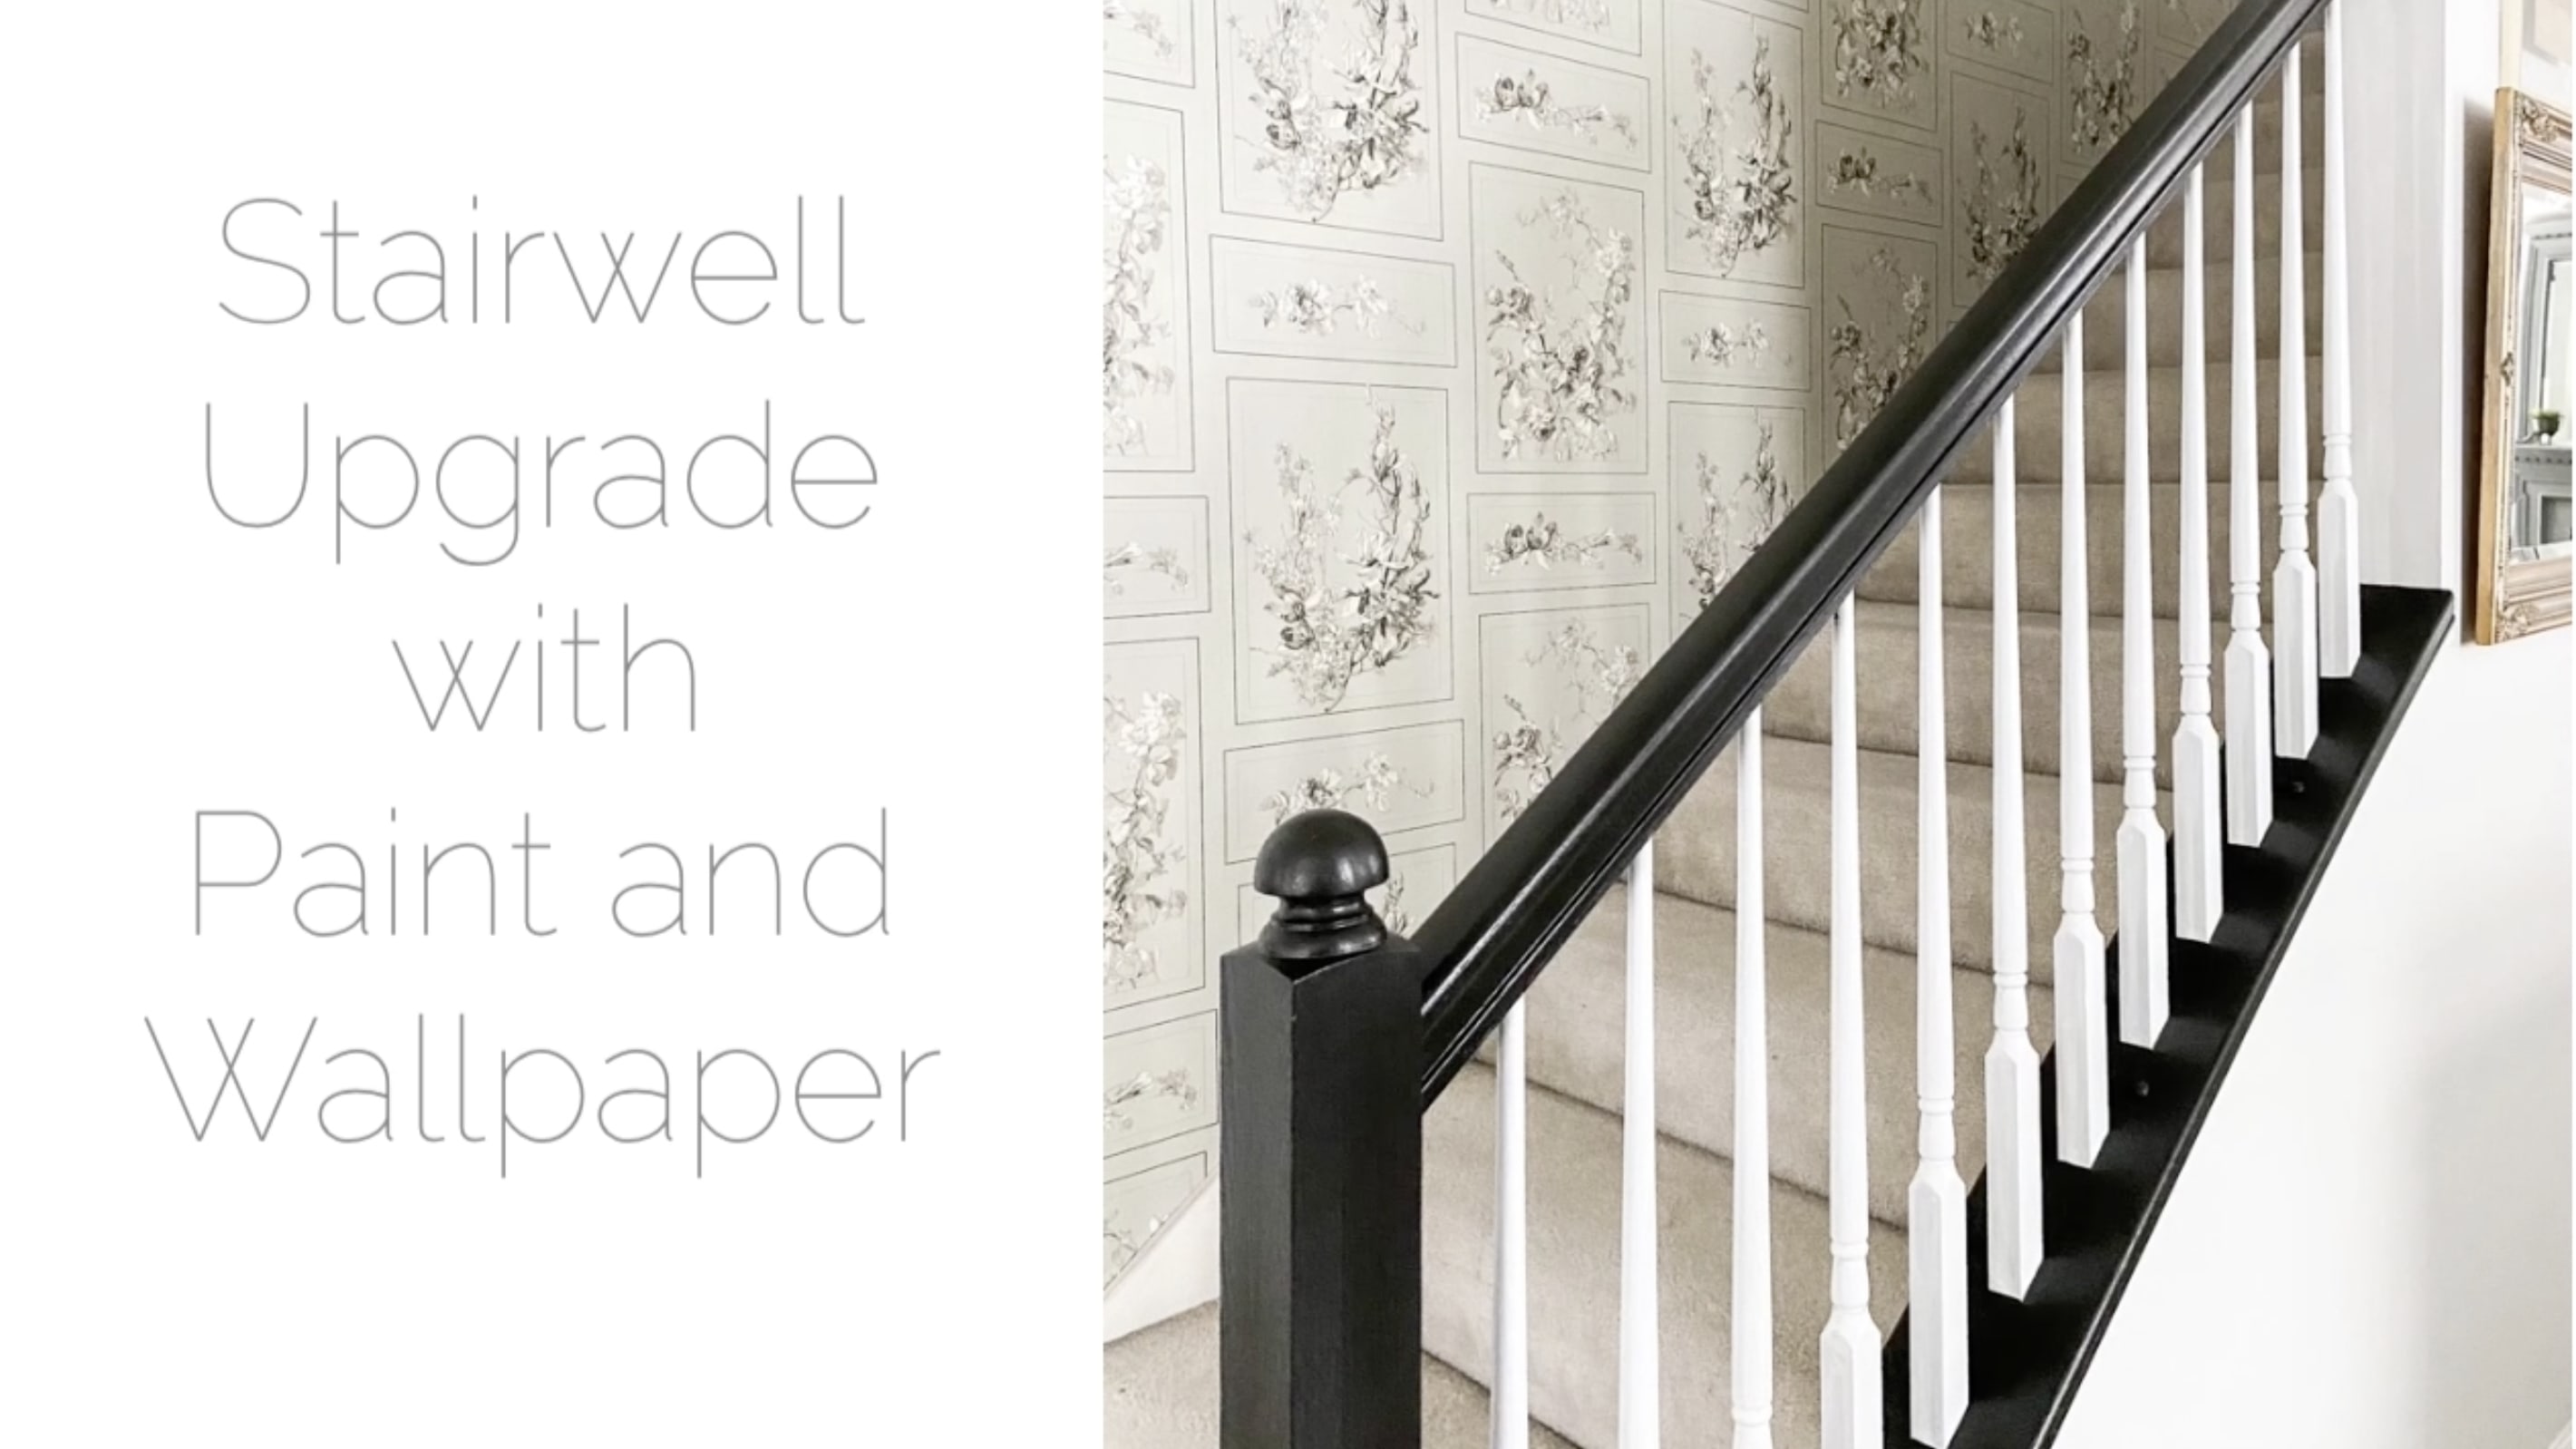 Staircase Beige Rivet Wallpaper Design Ideas